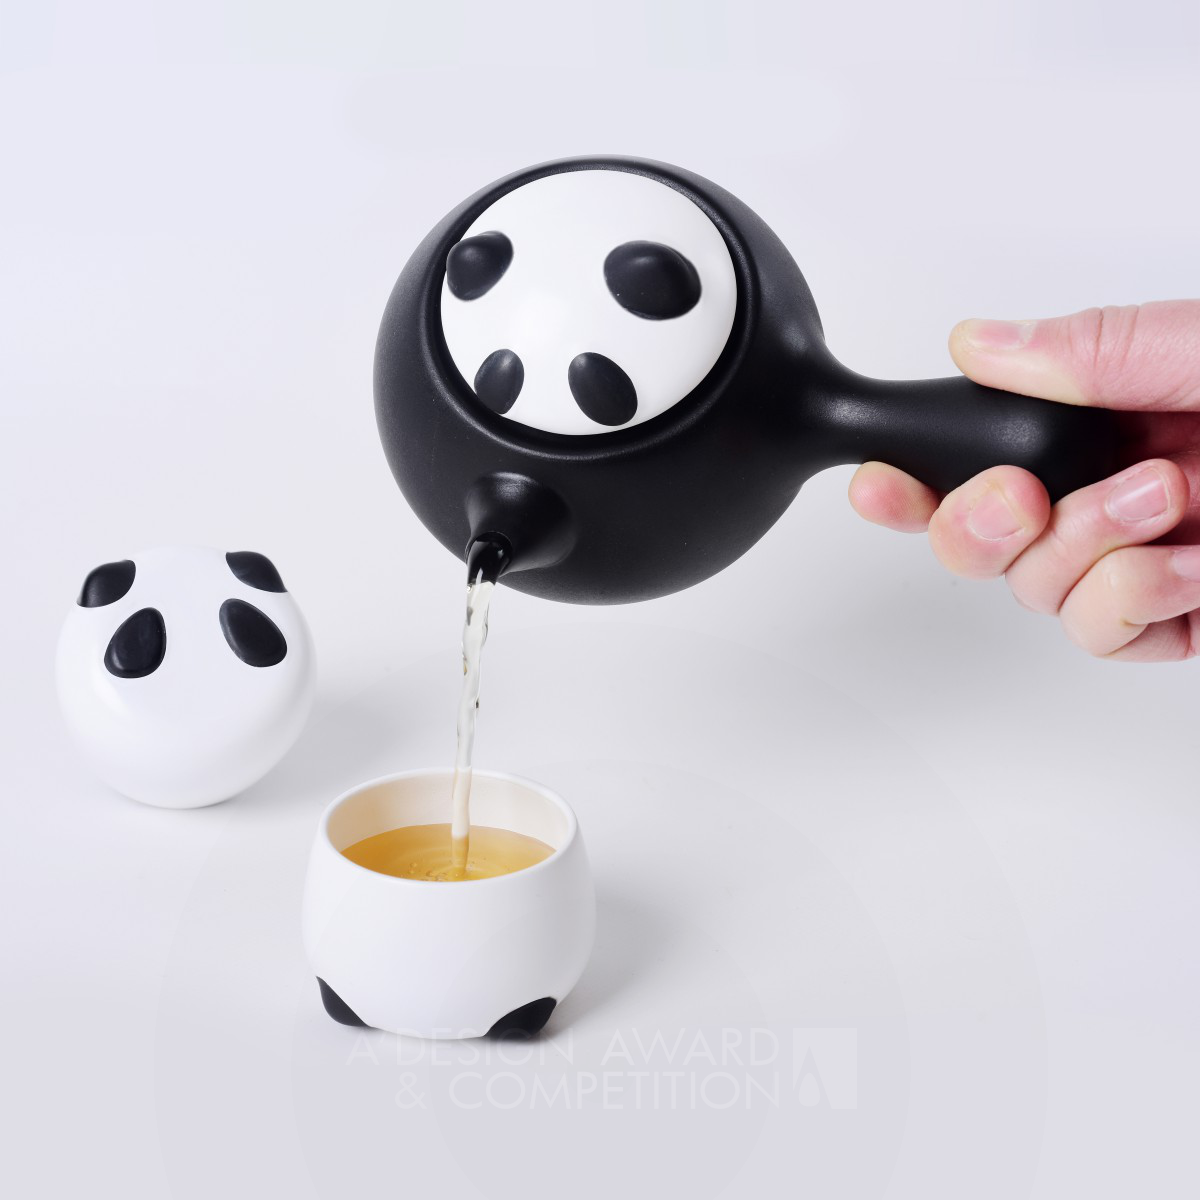 The Panda Themed Tea Set: Adding Joy and Harmony to Tea Time